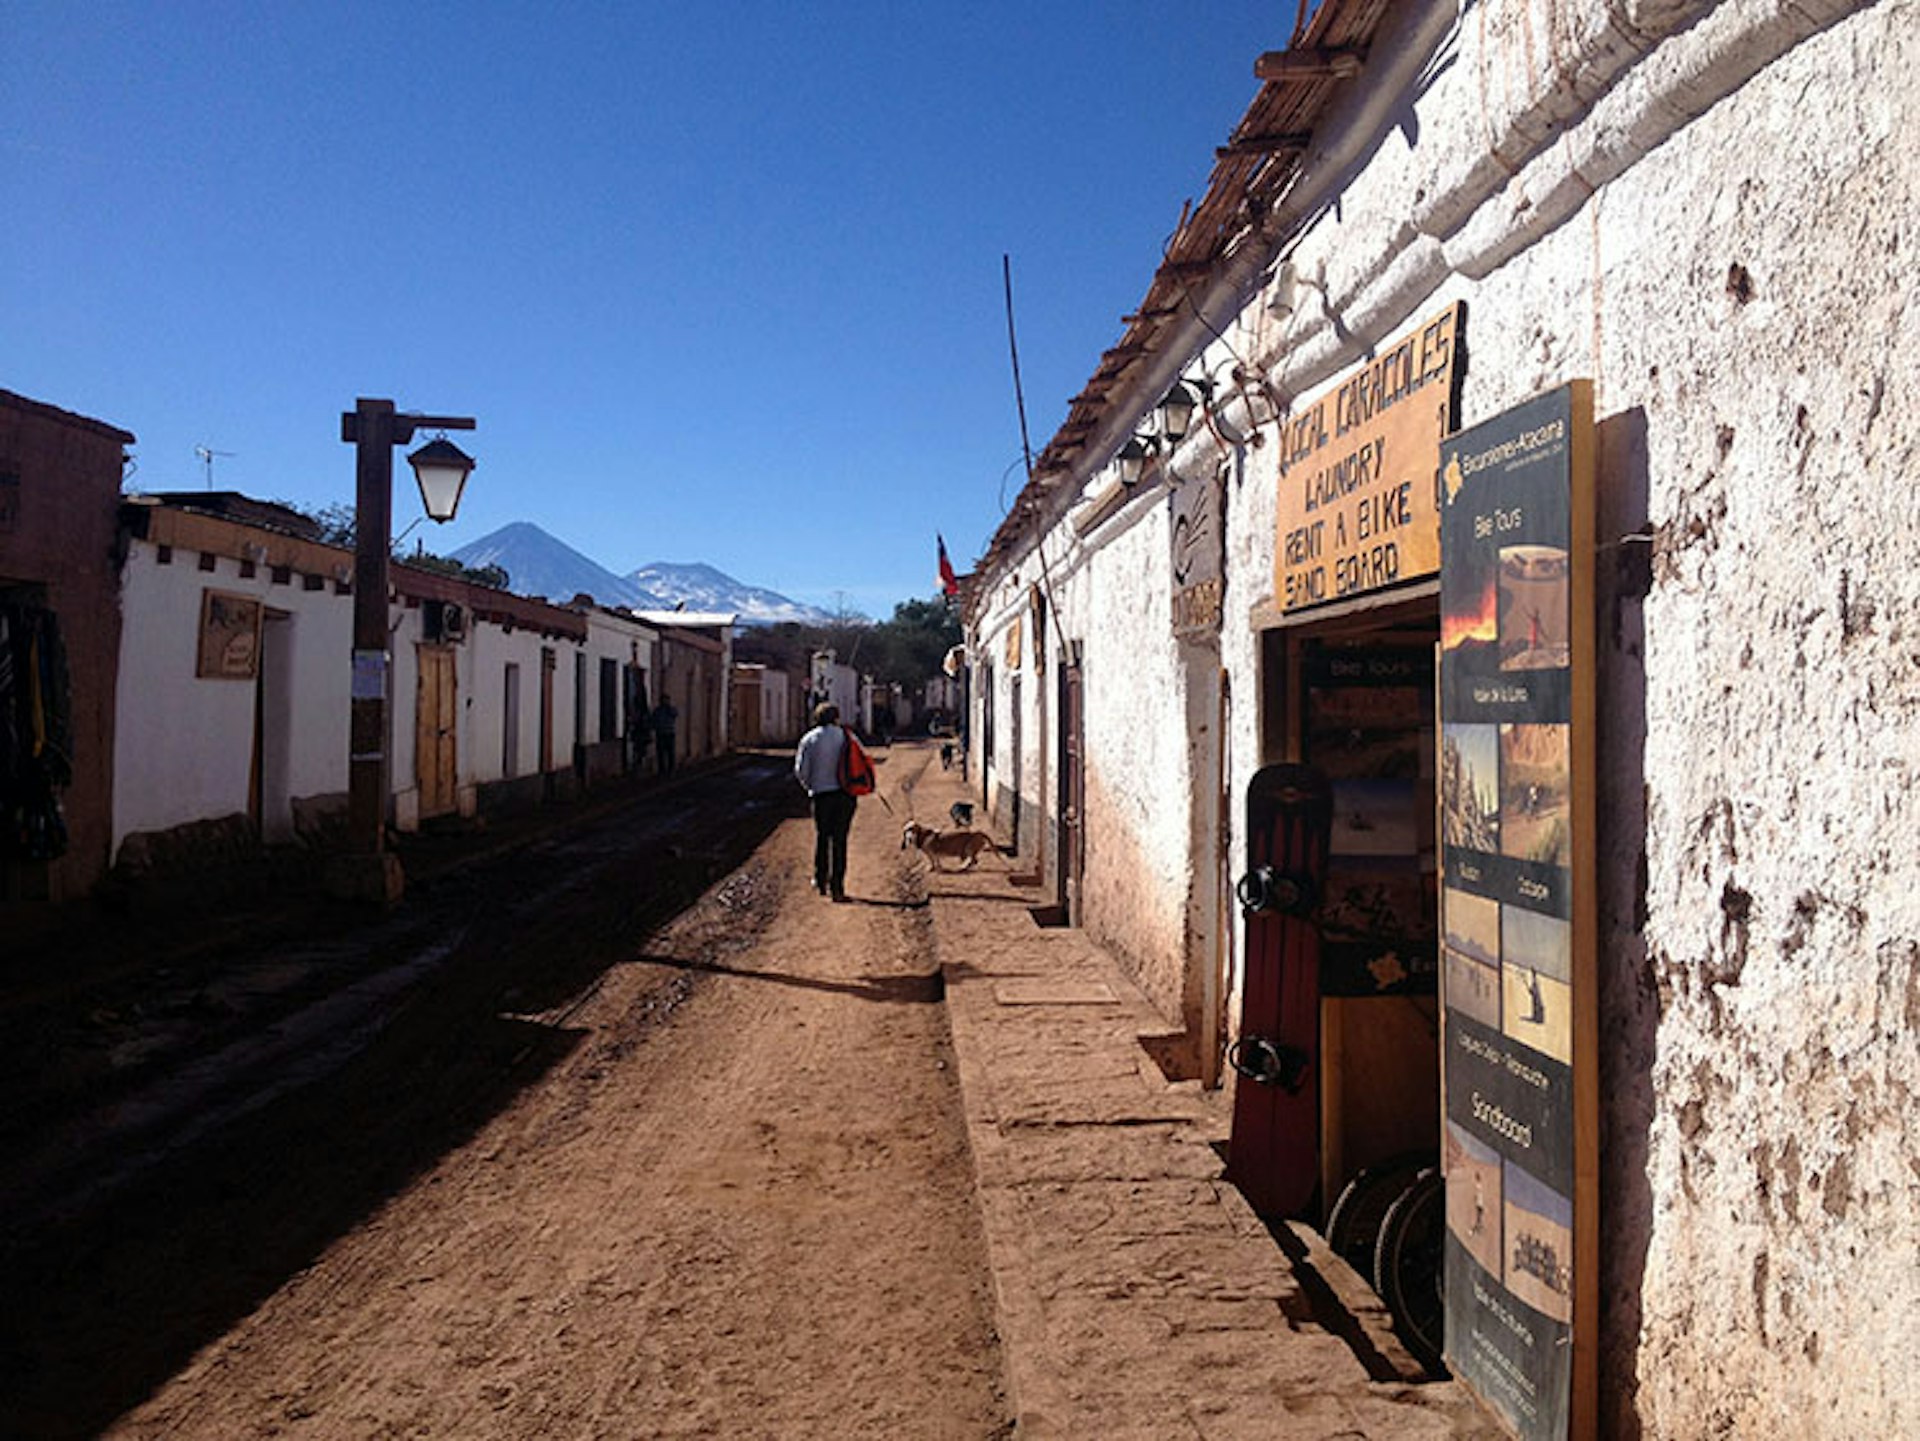 2. San Pedro de Atacama